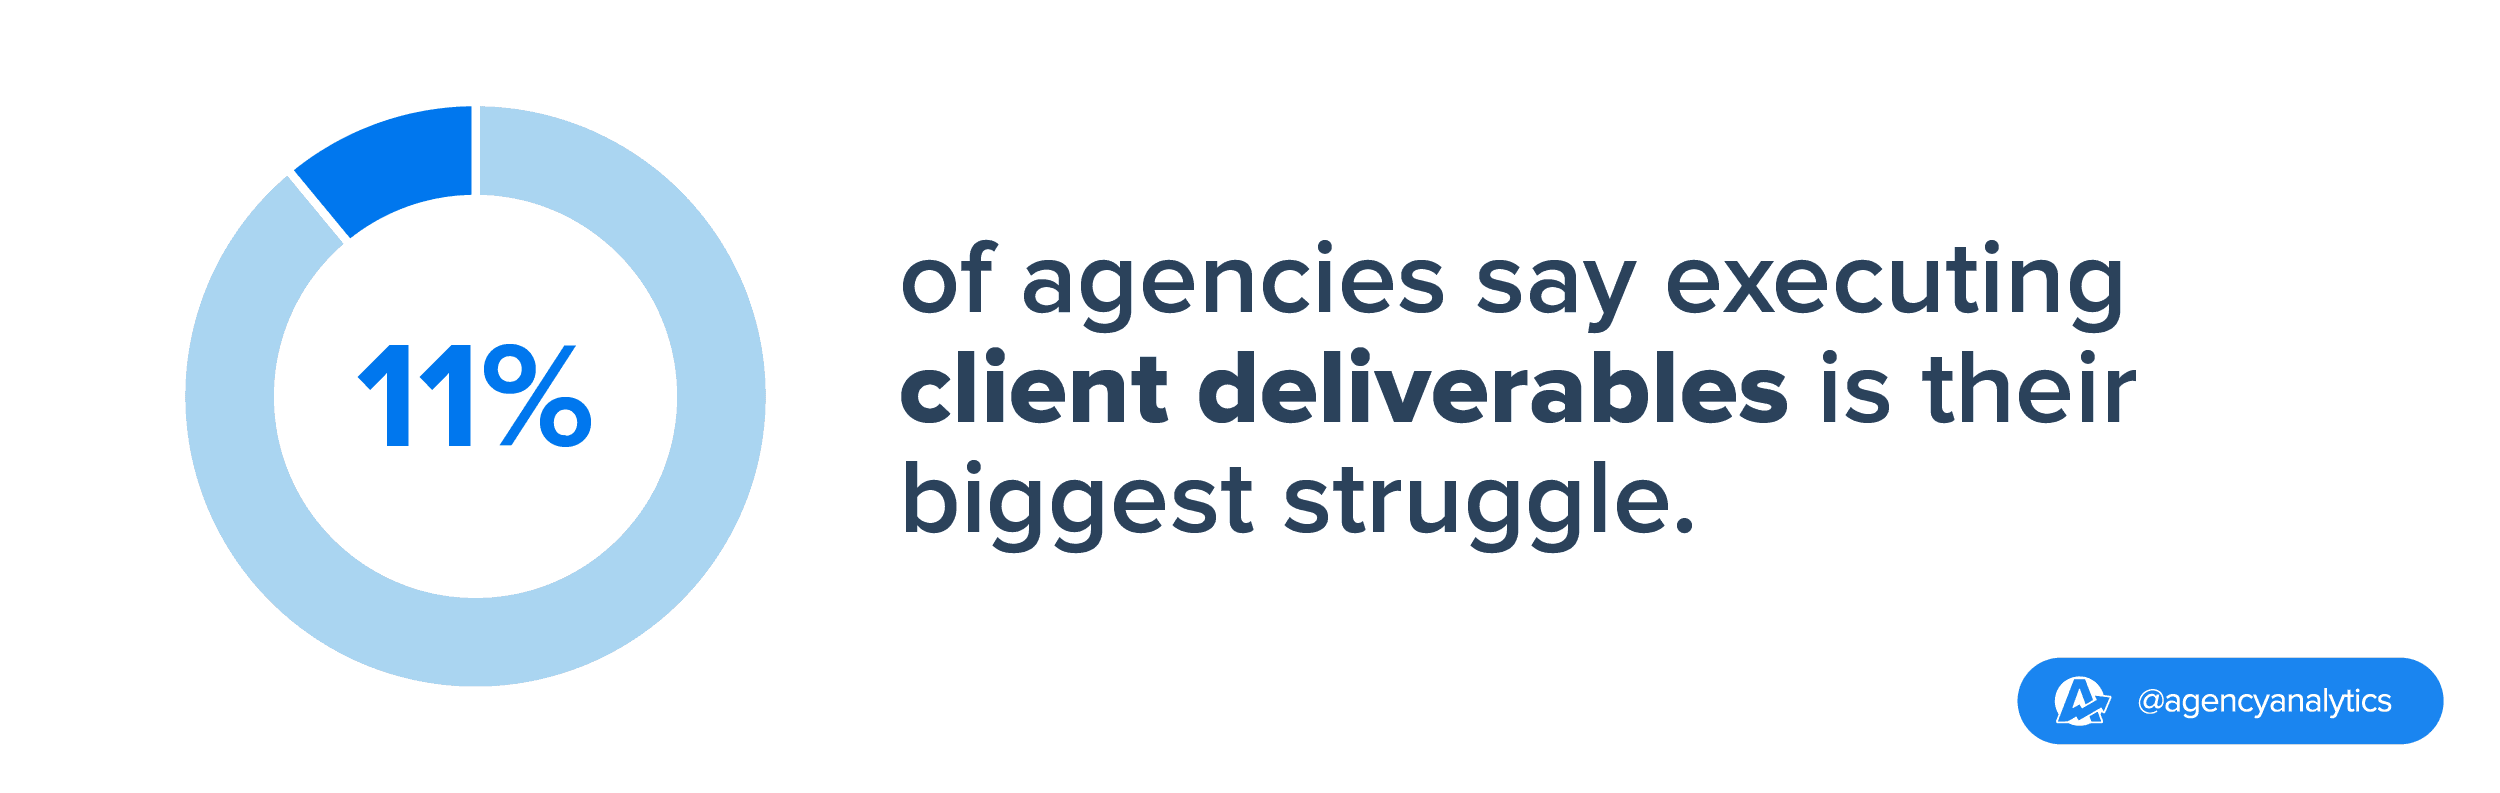 client deliverables agency challenge stat